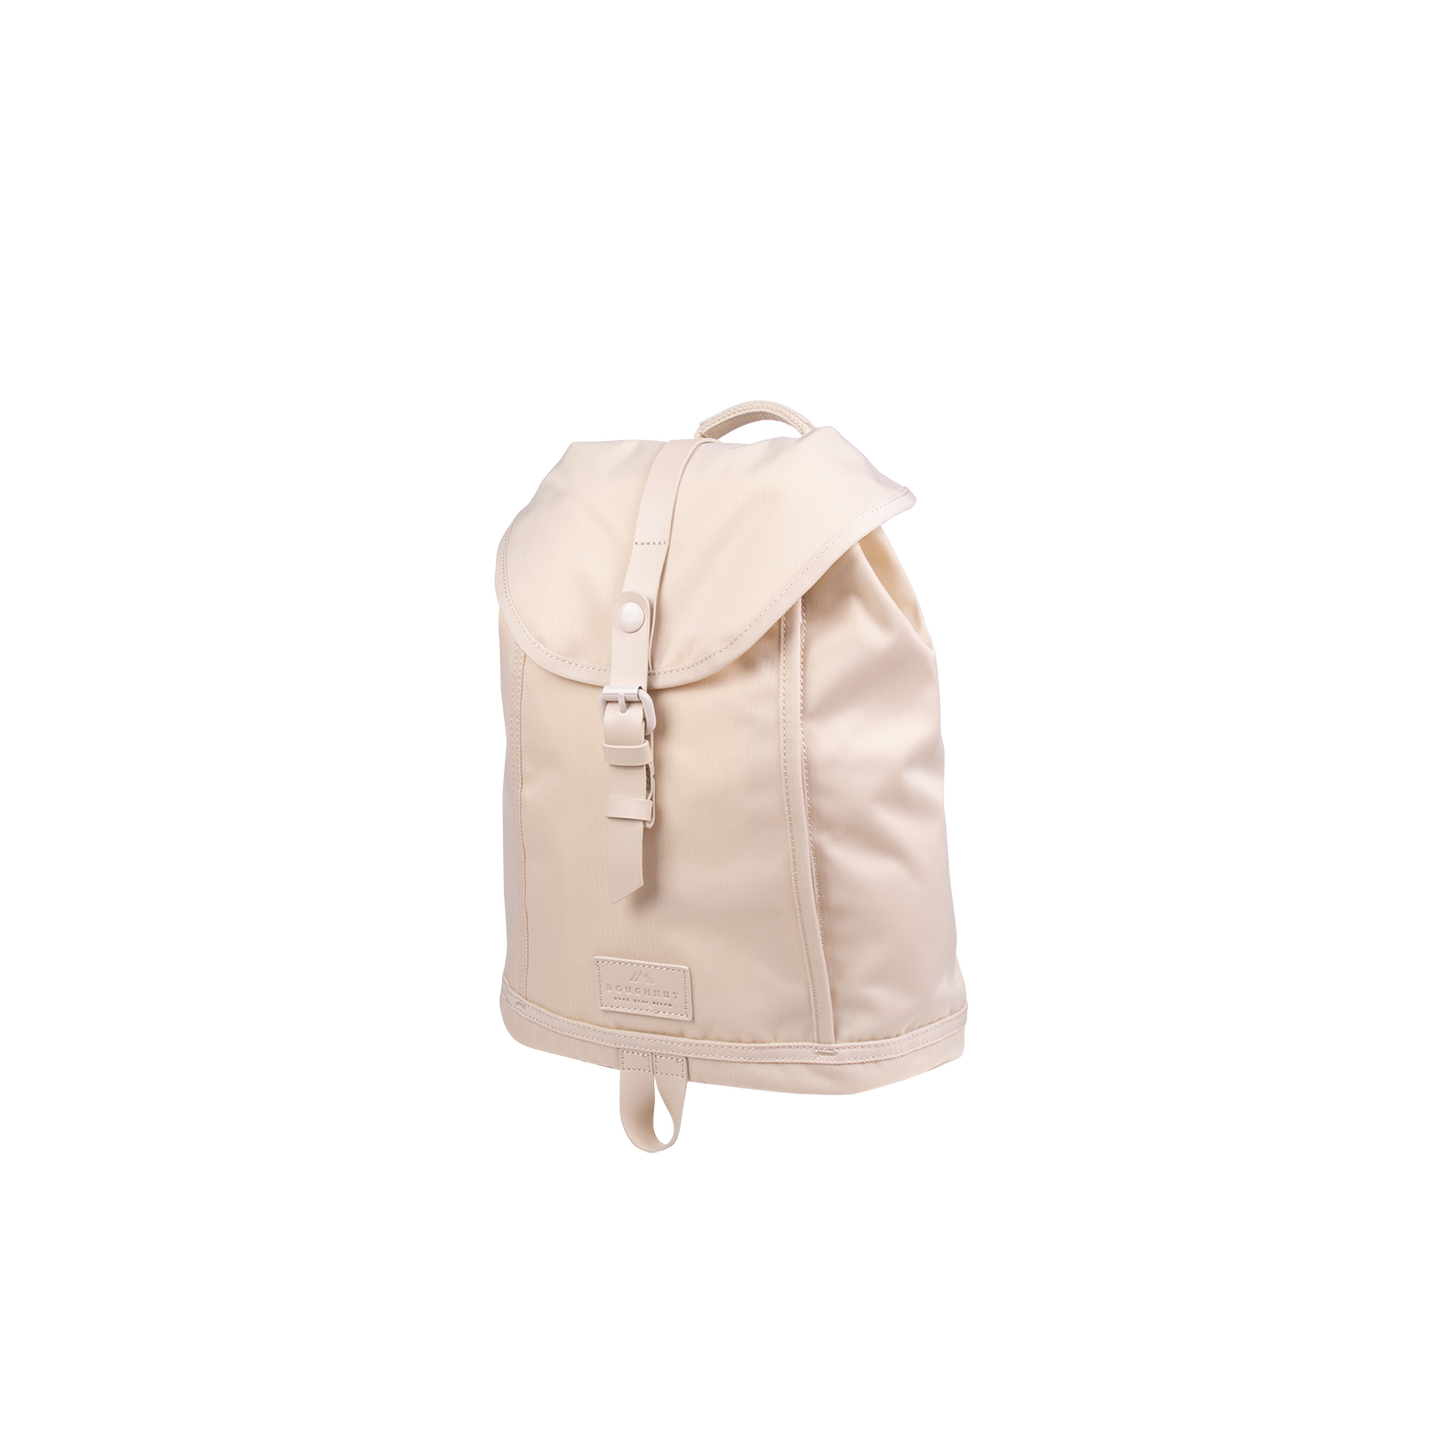 Cambridge Mini Nature Pale Series Backpack